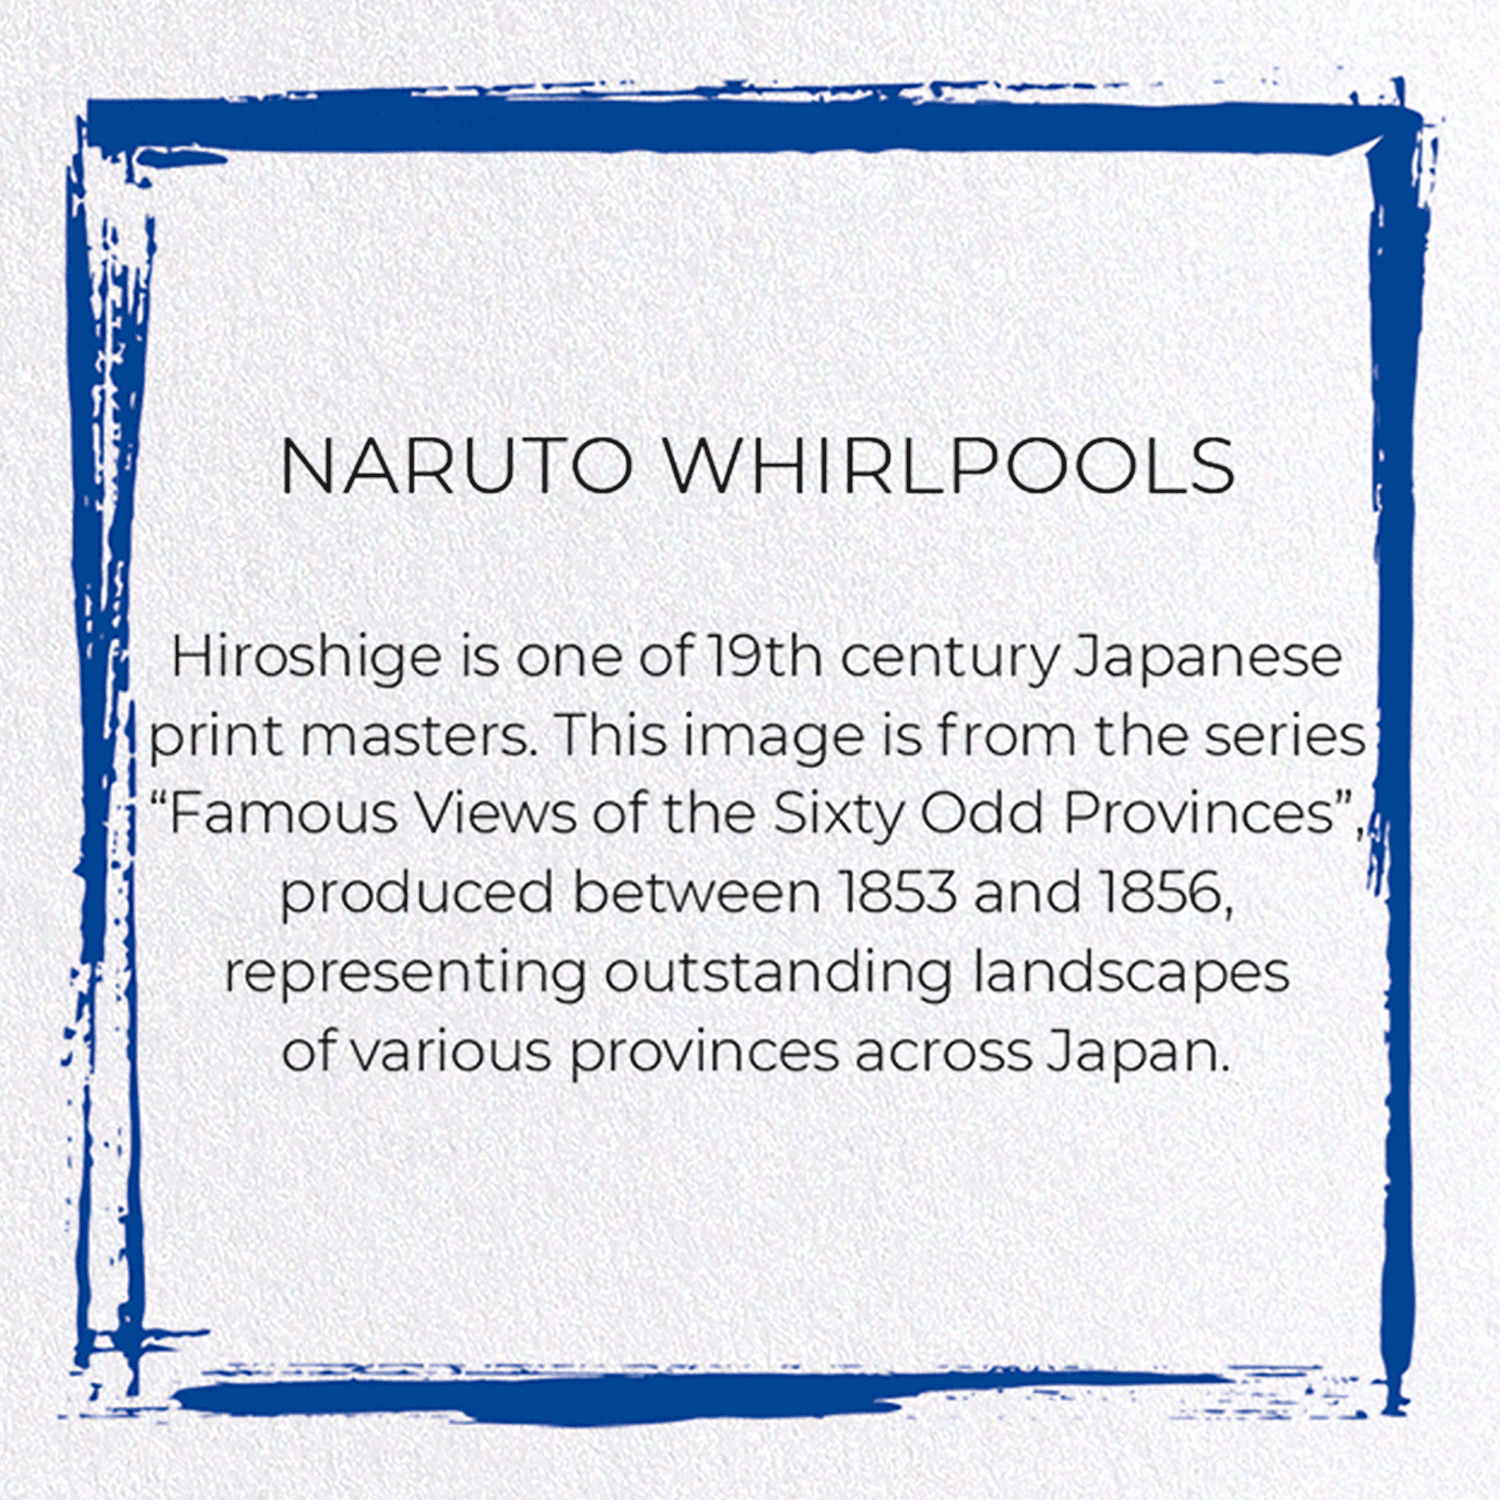 NARUTO WHIRLPOOLS: Japanese Greeting Card